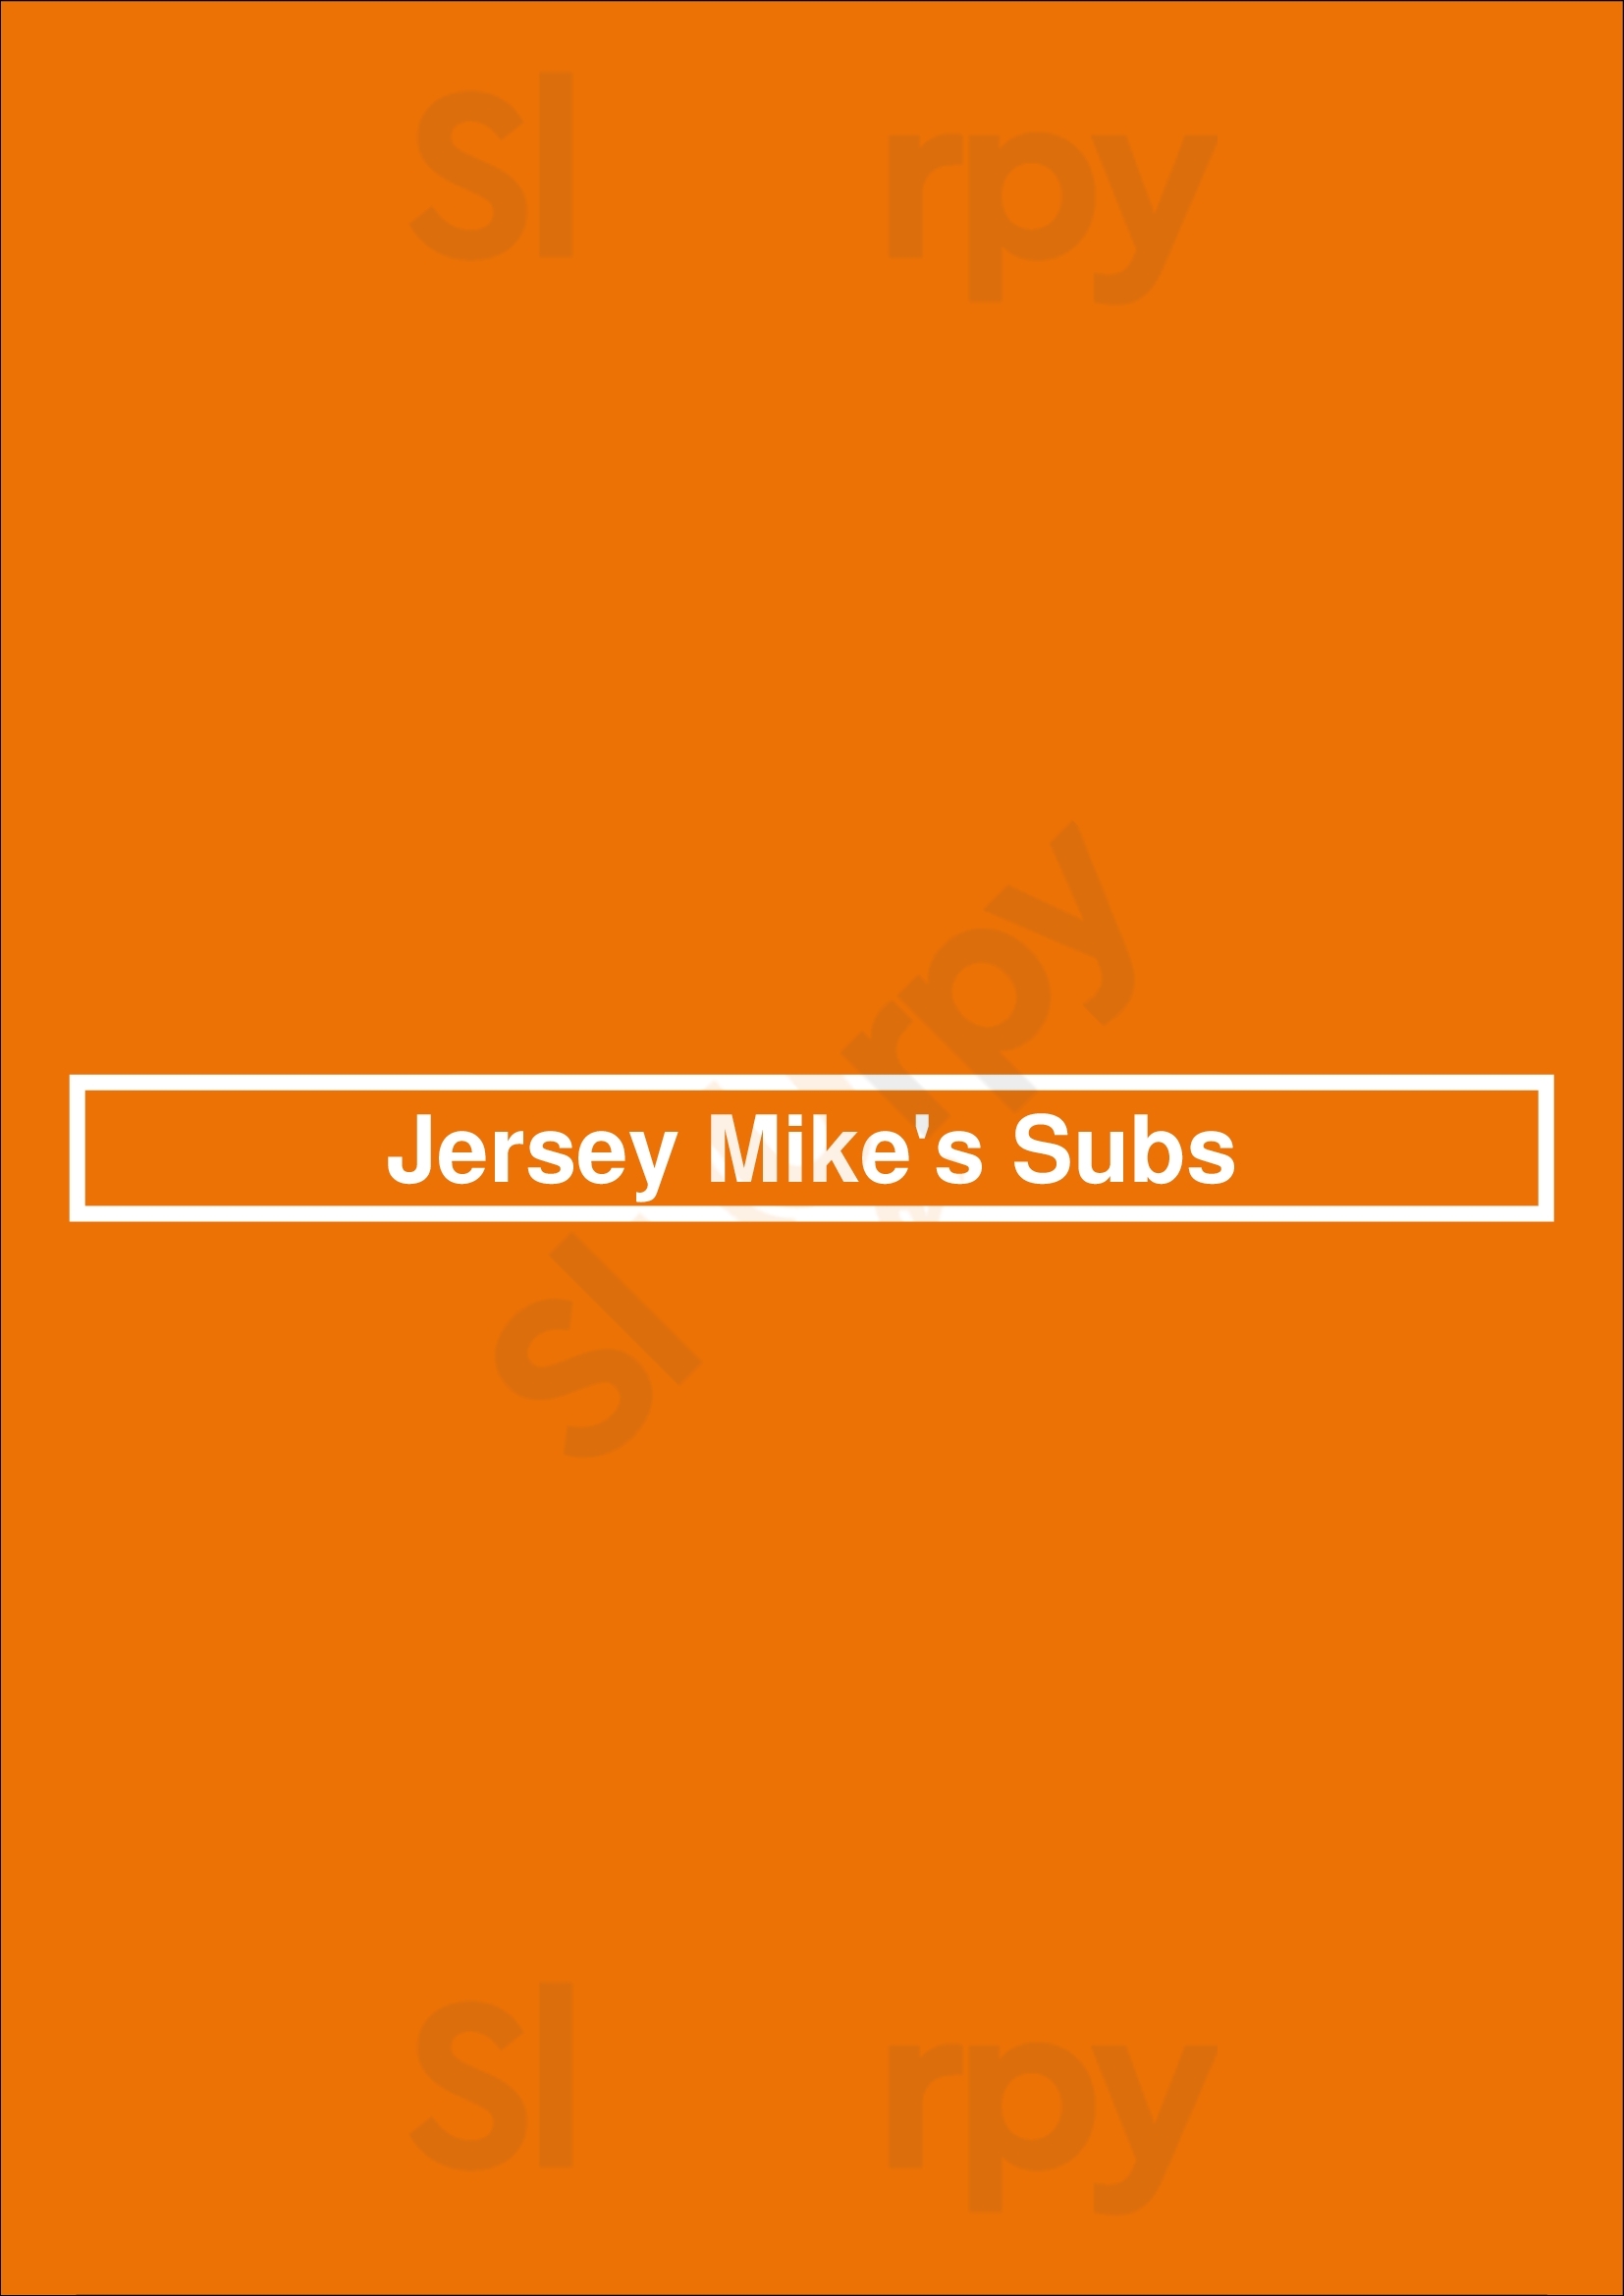 Jersey Mike's Subs Glen Mills Menu - 1